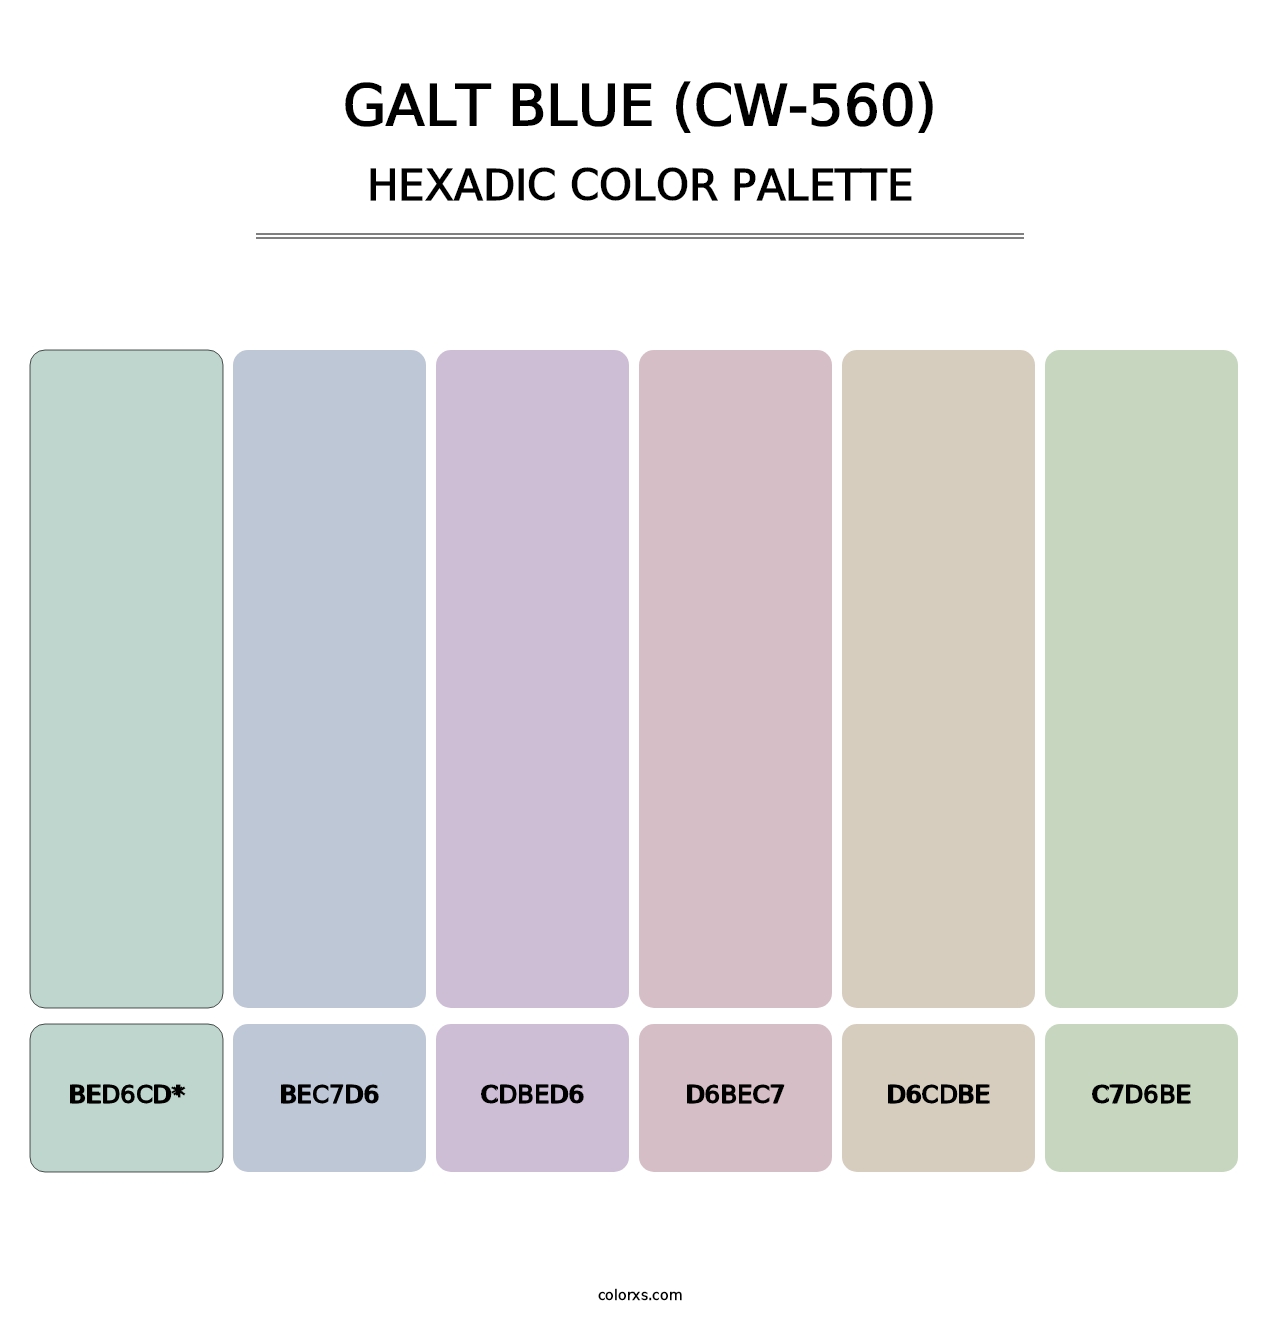 Galt Blue (CW-560) - Hexadic Color Palette